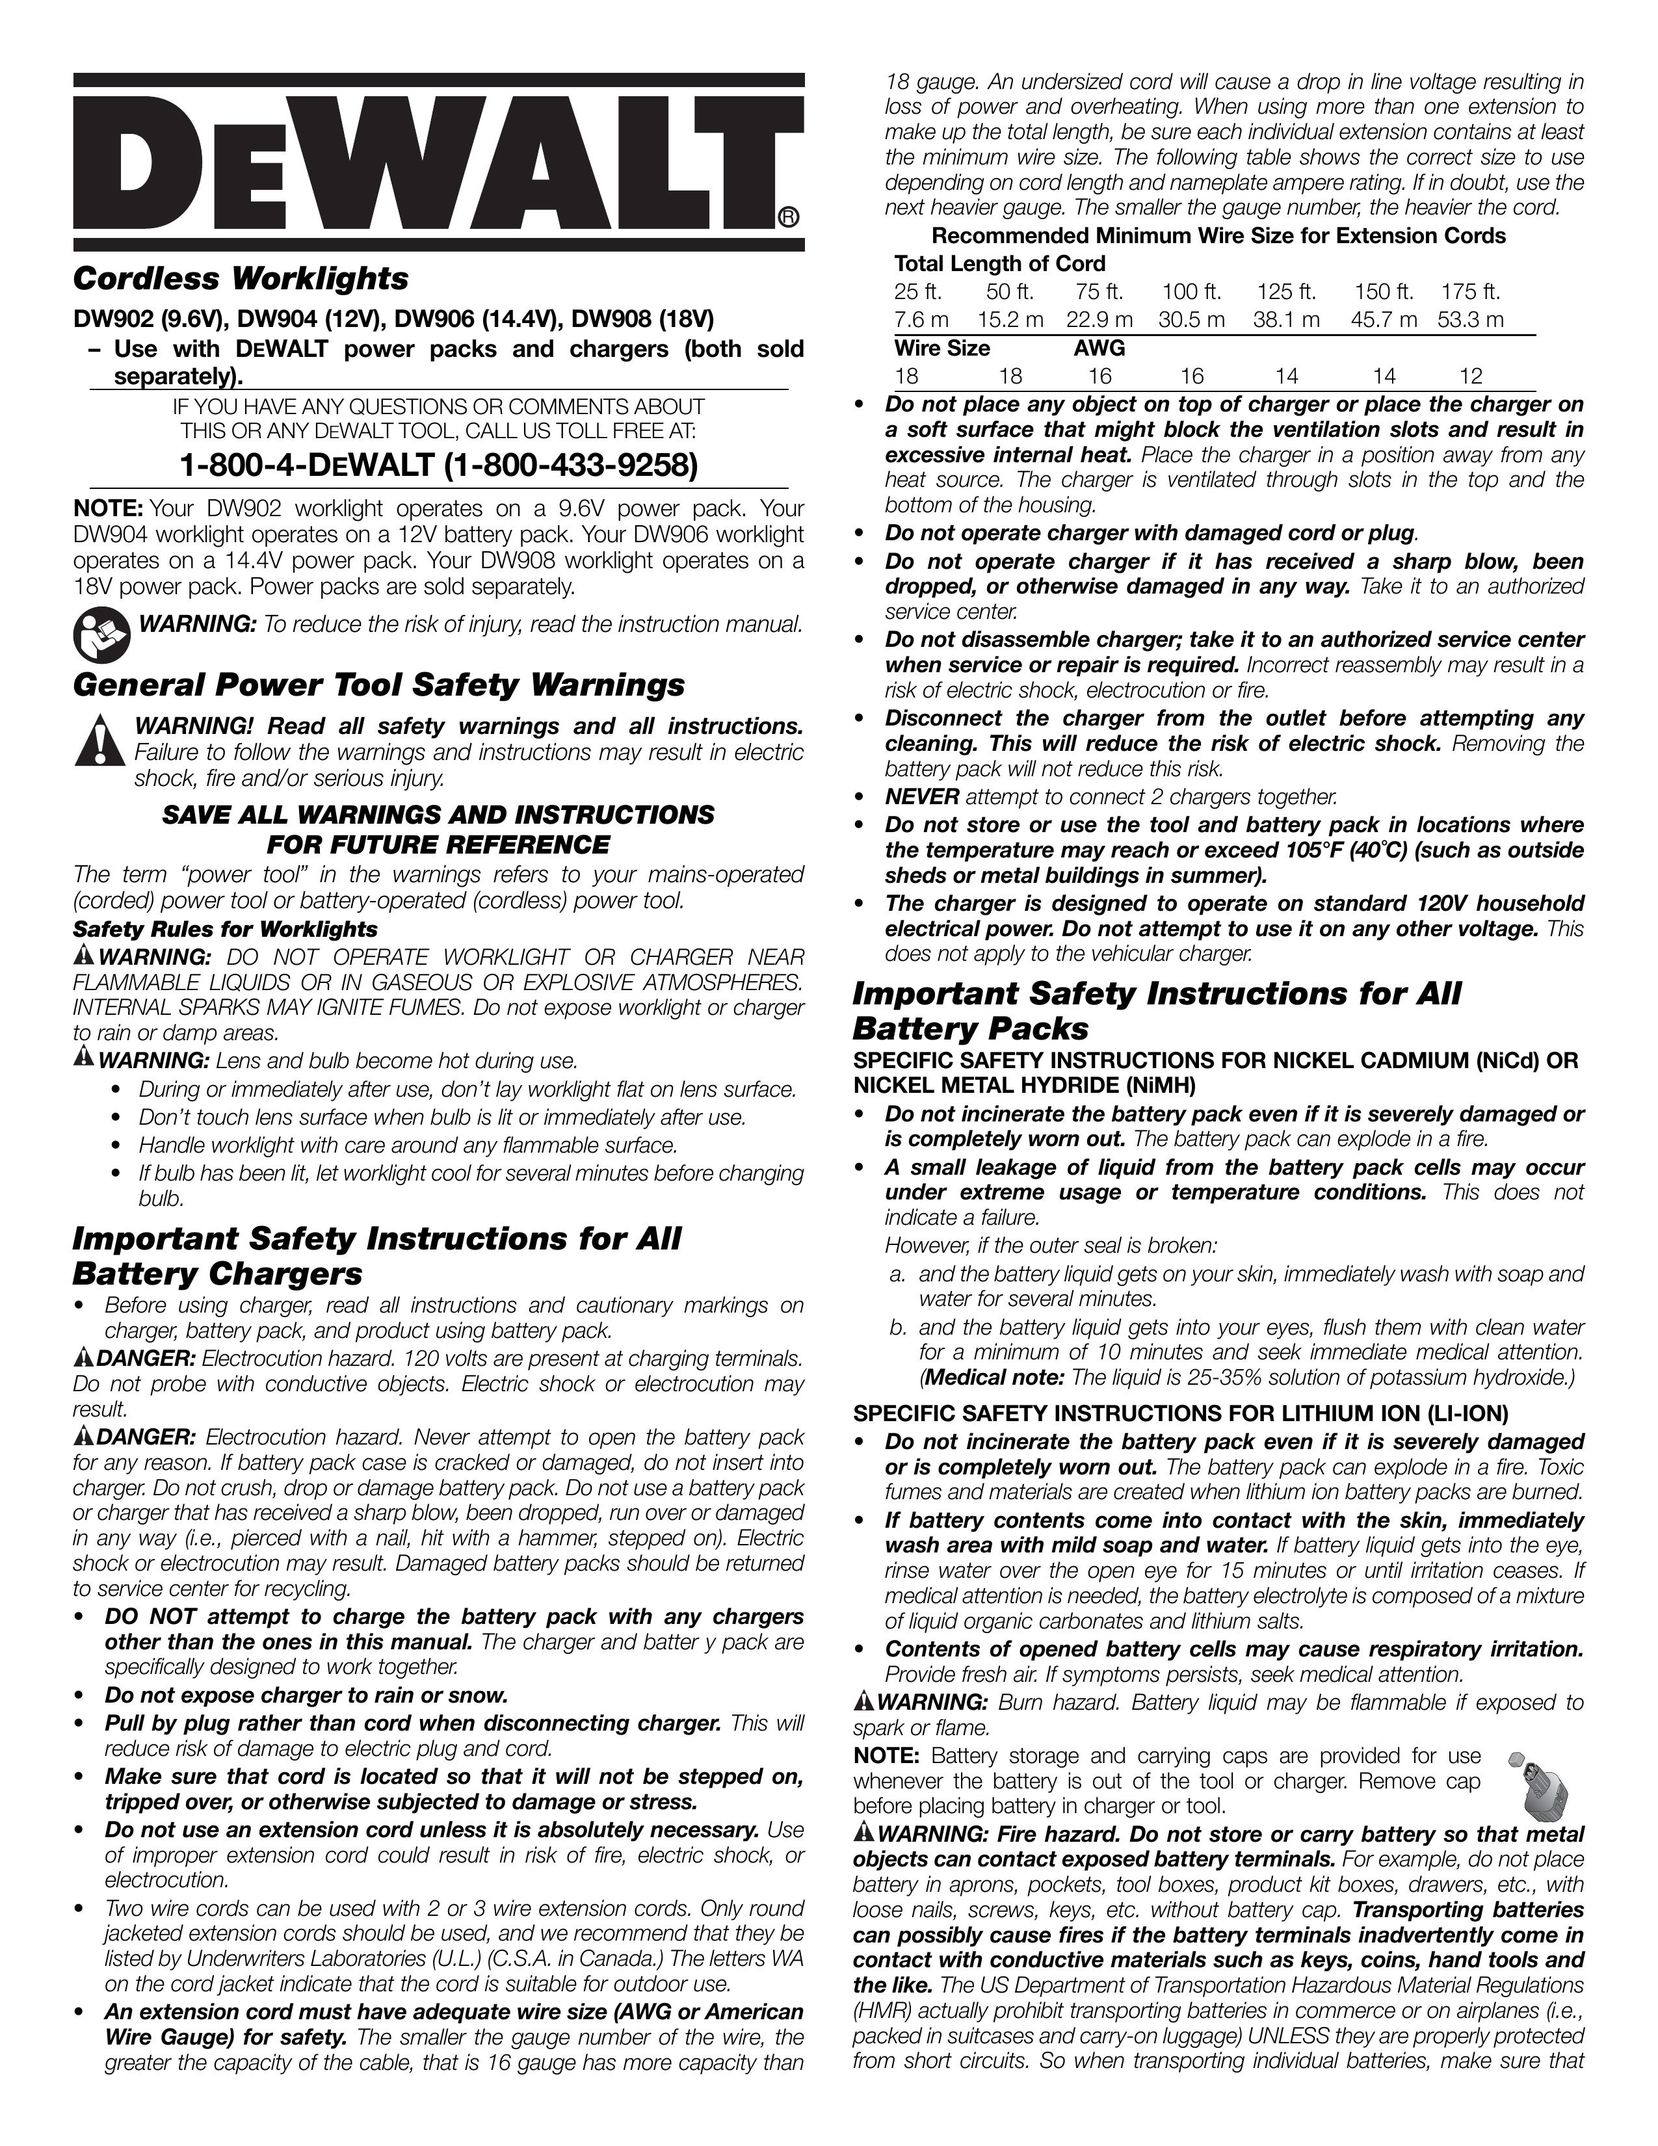 DeWalt DW904 Home Safety Product User Manual